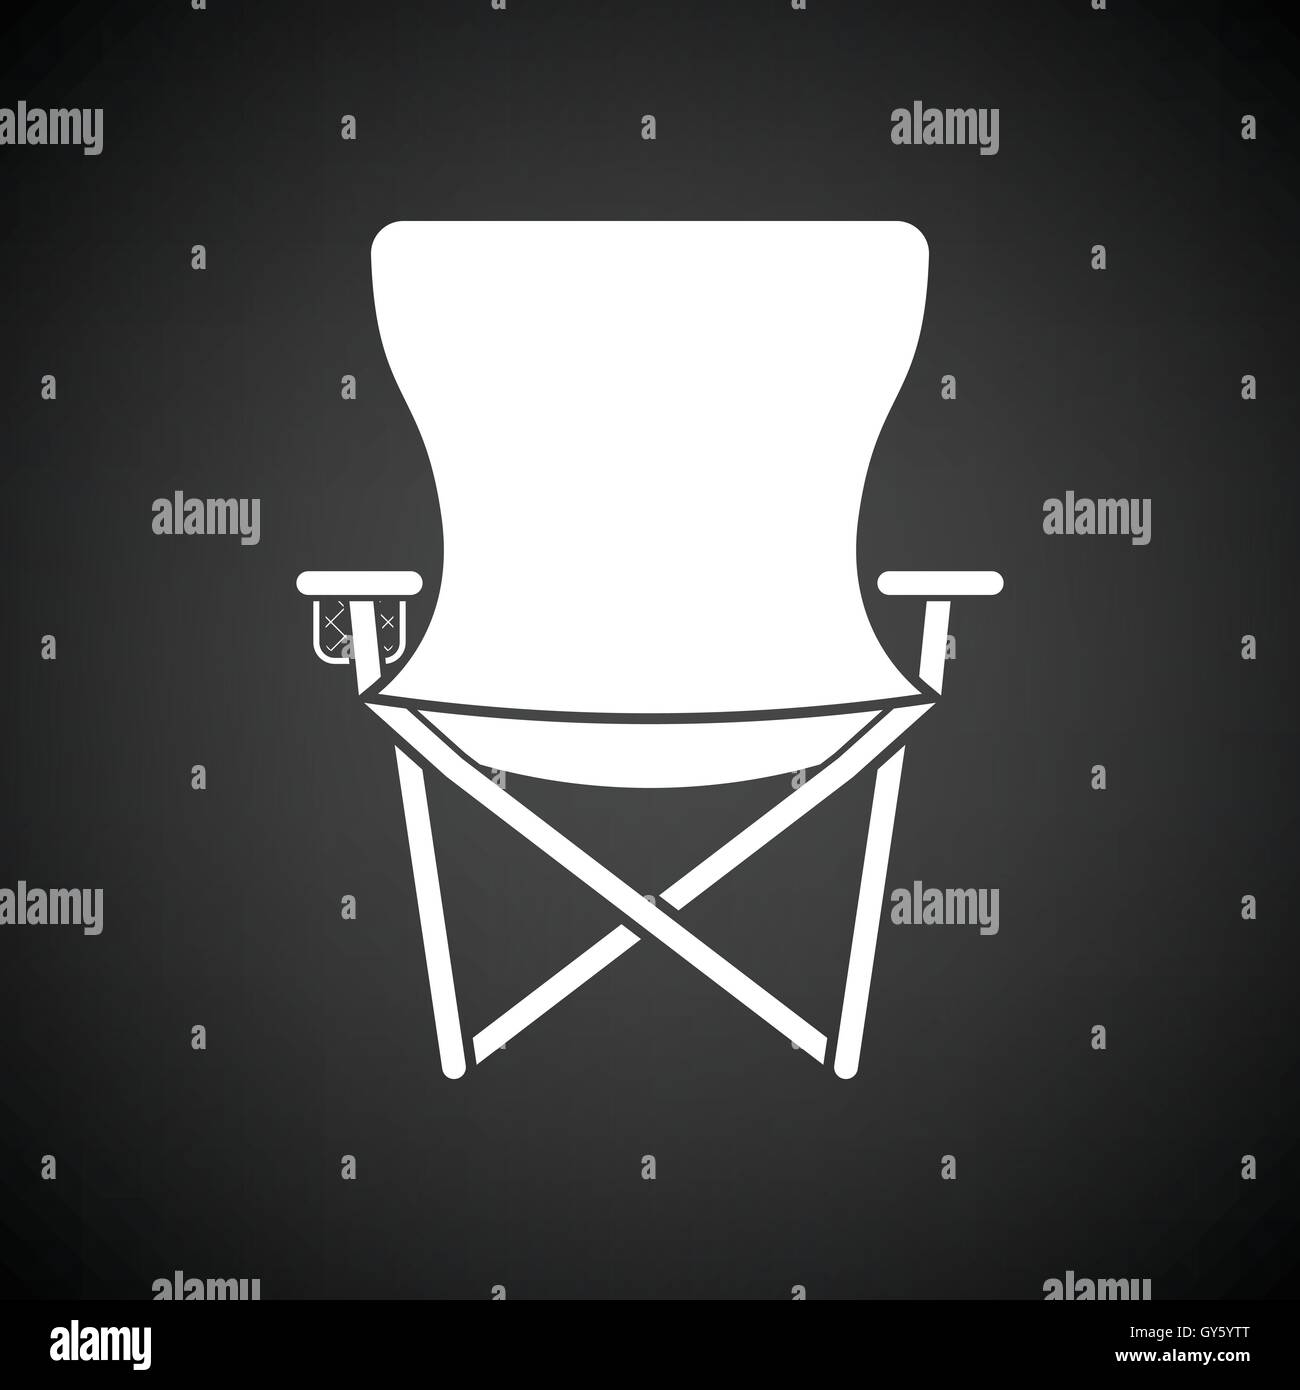 https://c8.alamy.com/comp/GY5YTT/icon-of-fishing-folding-chair-black-background-with-white-vector-illustration-GY5YTT.jpg